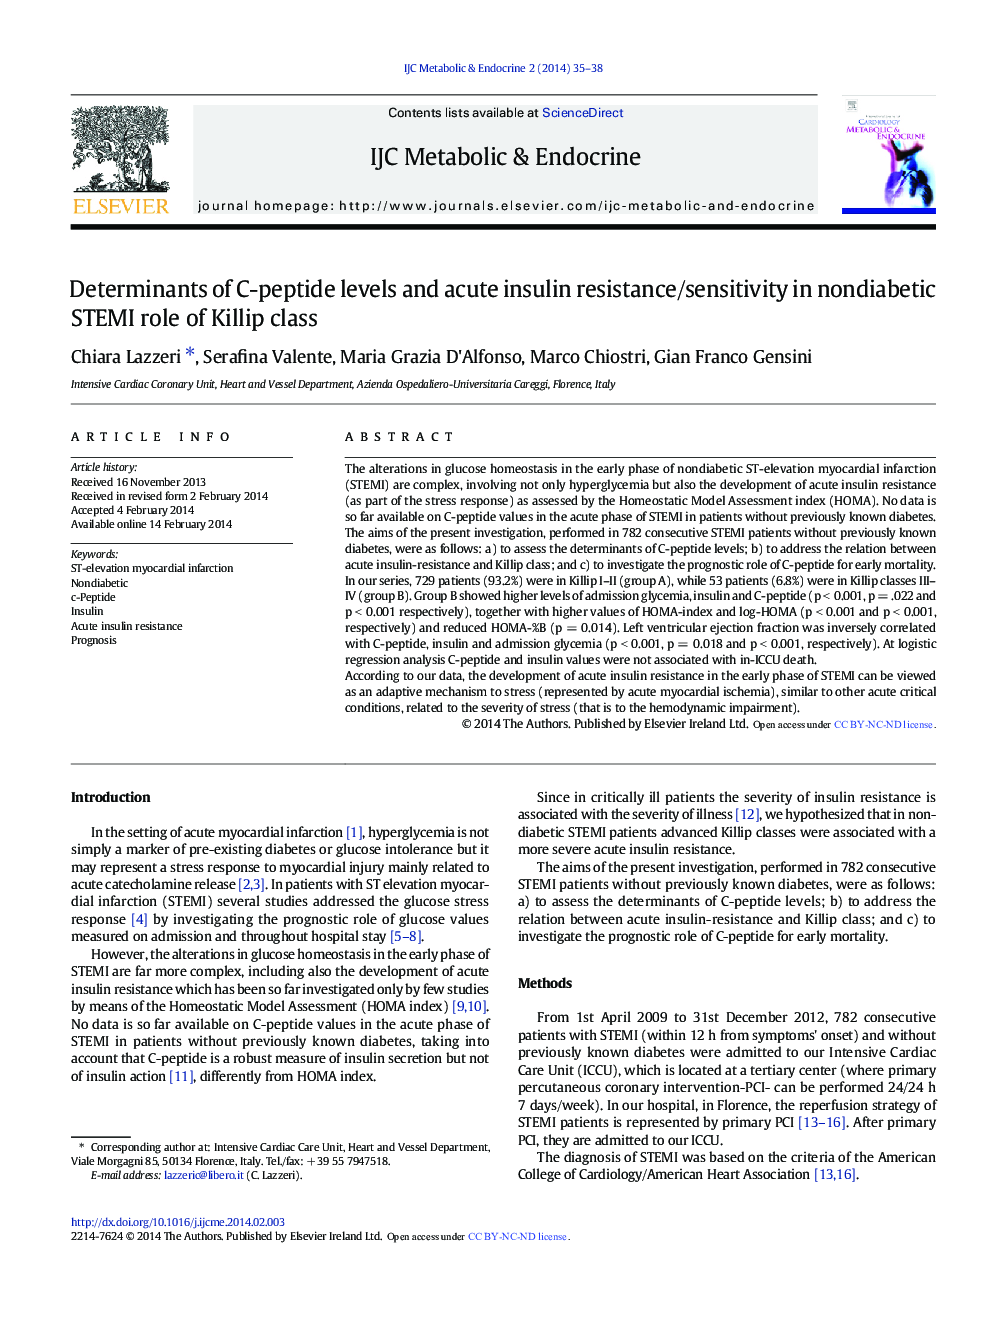 Determinants of C-peptide levels and acute insulin resistance/sensitivity in nondiabetic STEMI role of Killip class 